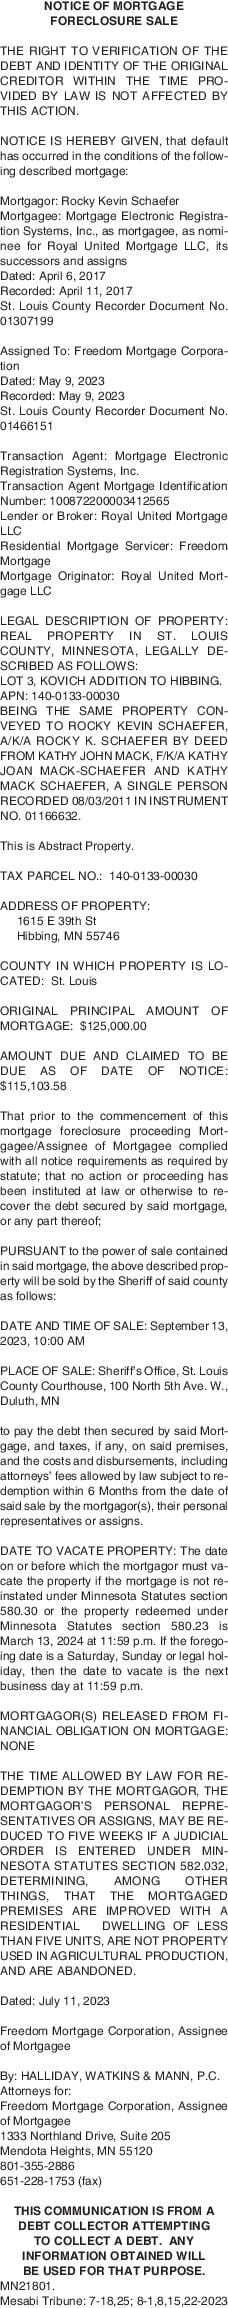 covid mortgage defaults